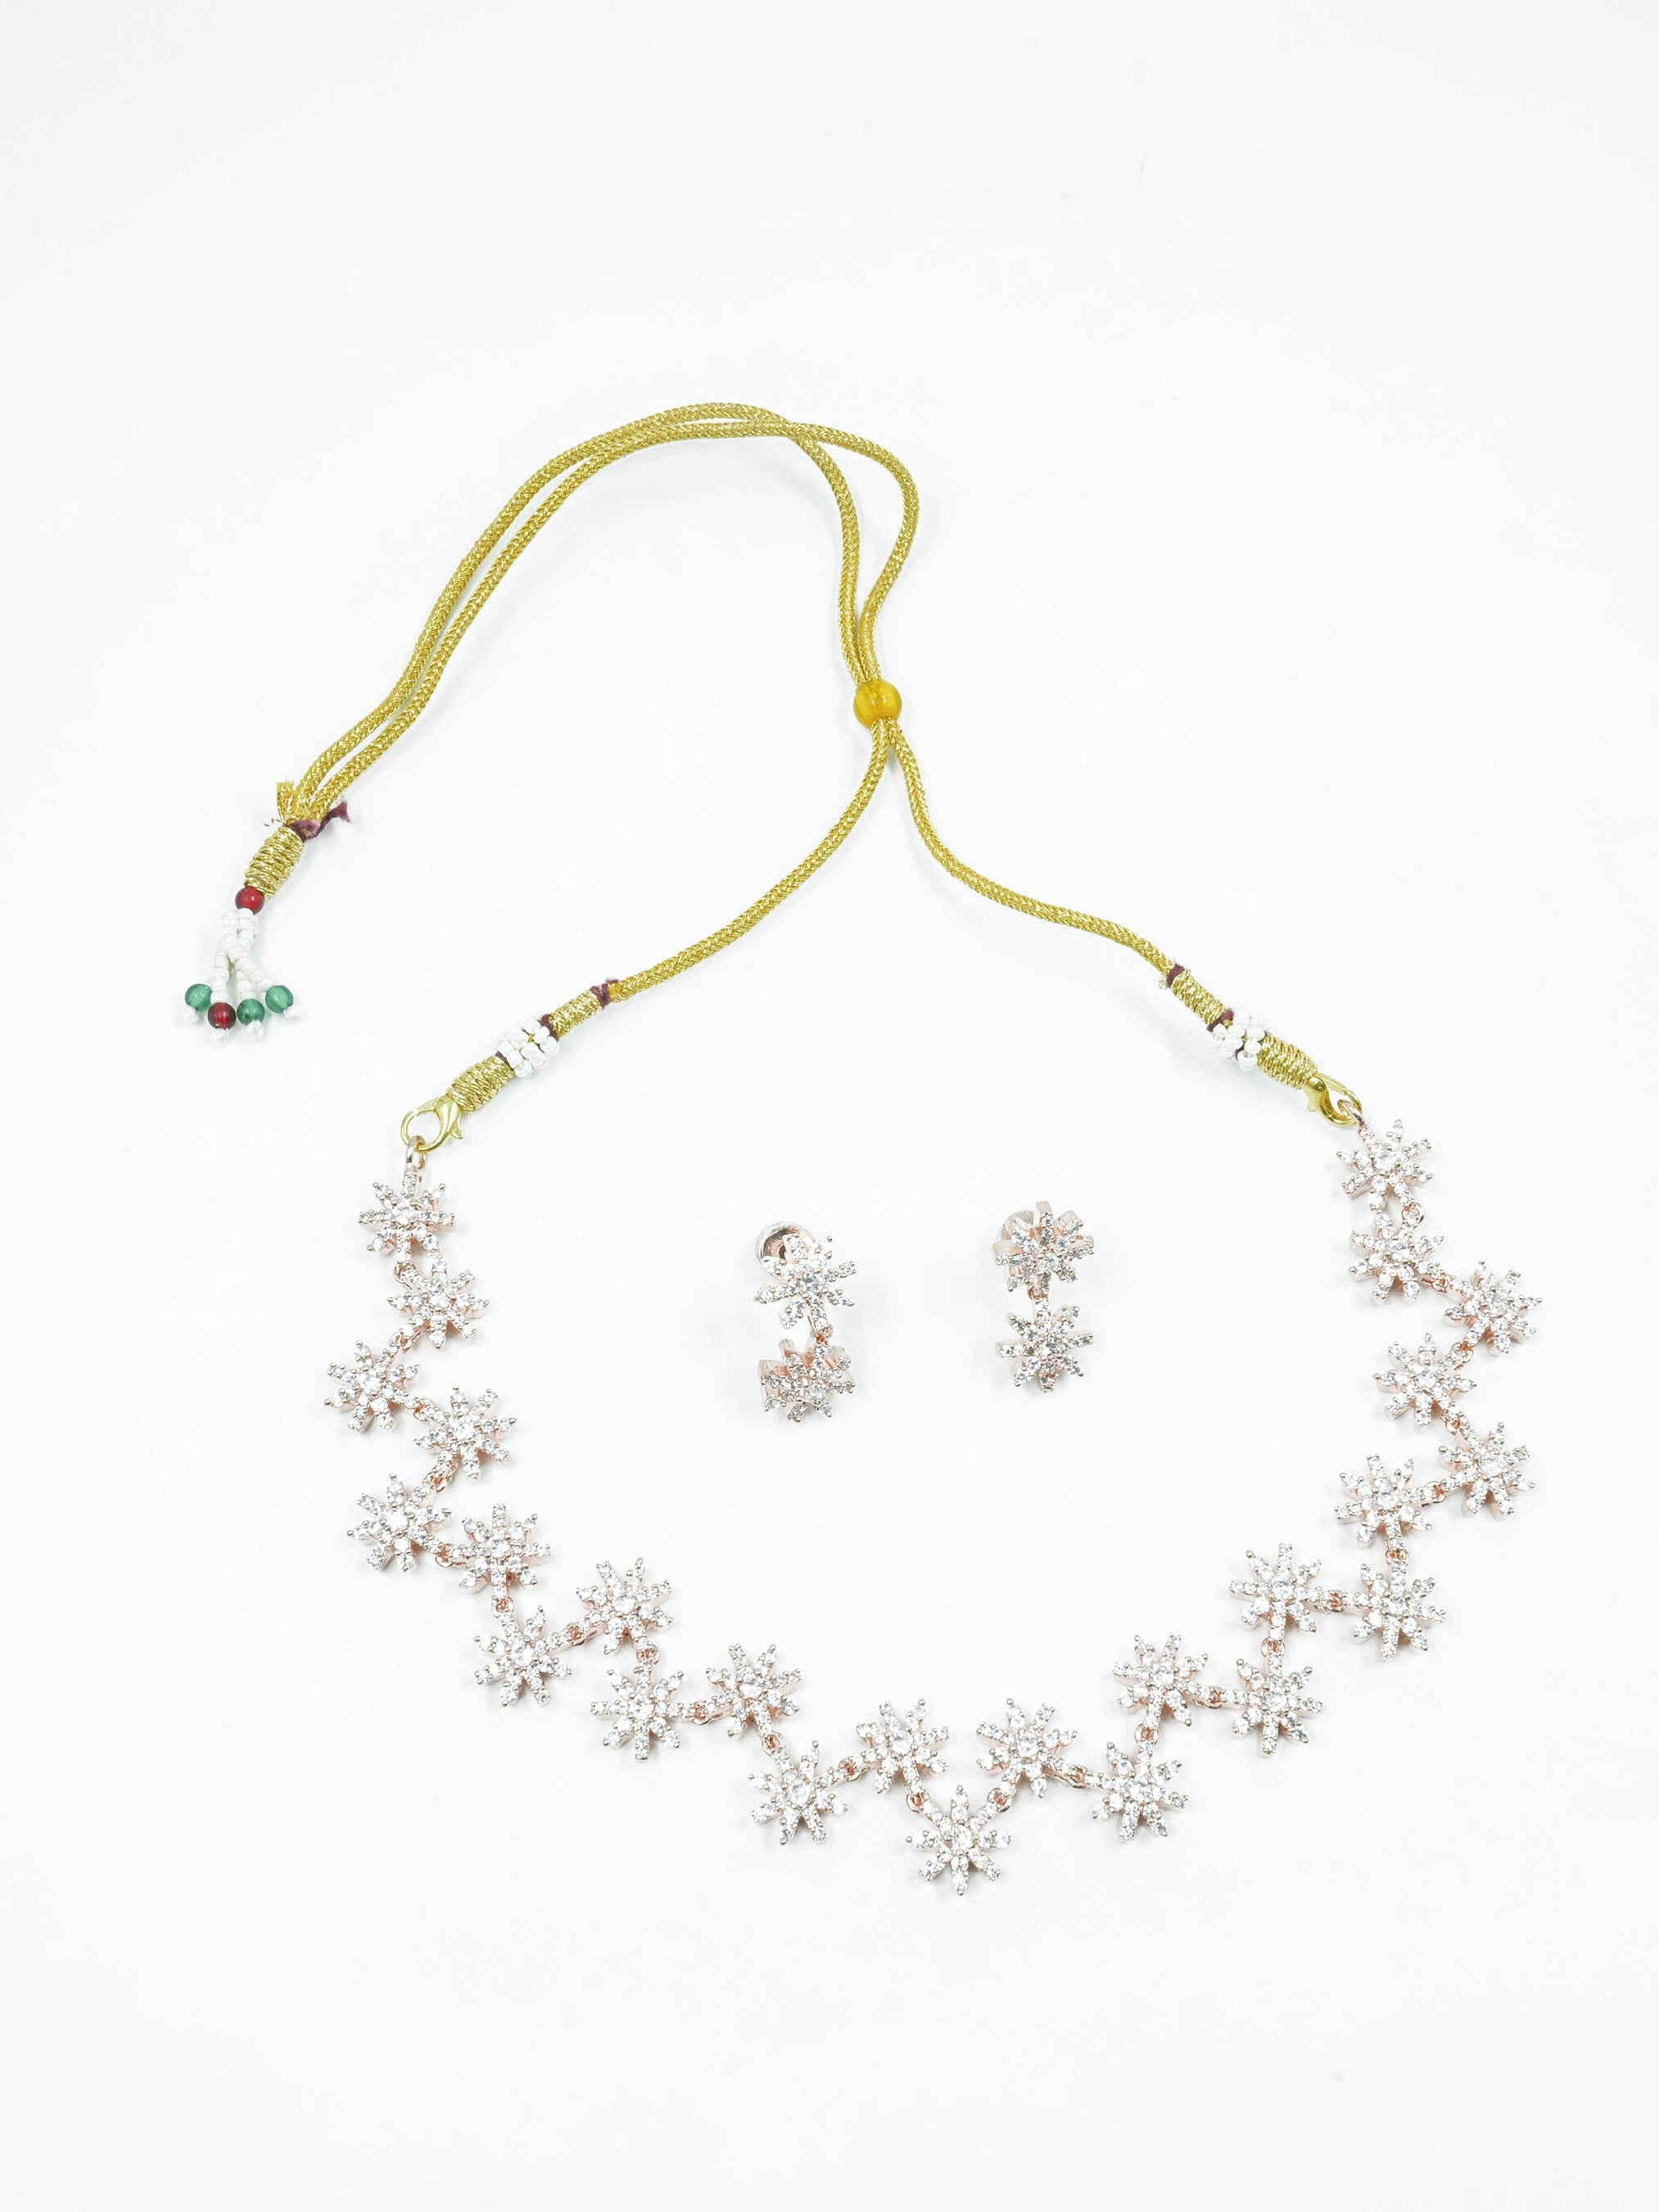 Elegant premium quality cz necklace white gold 12802N